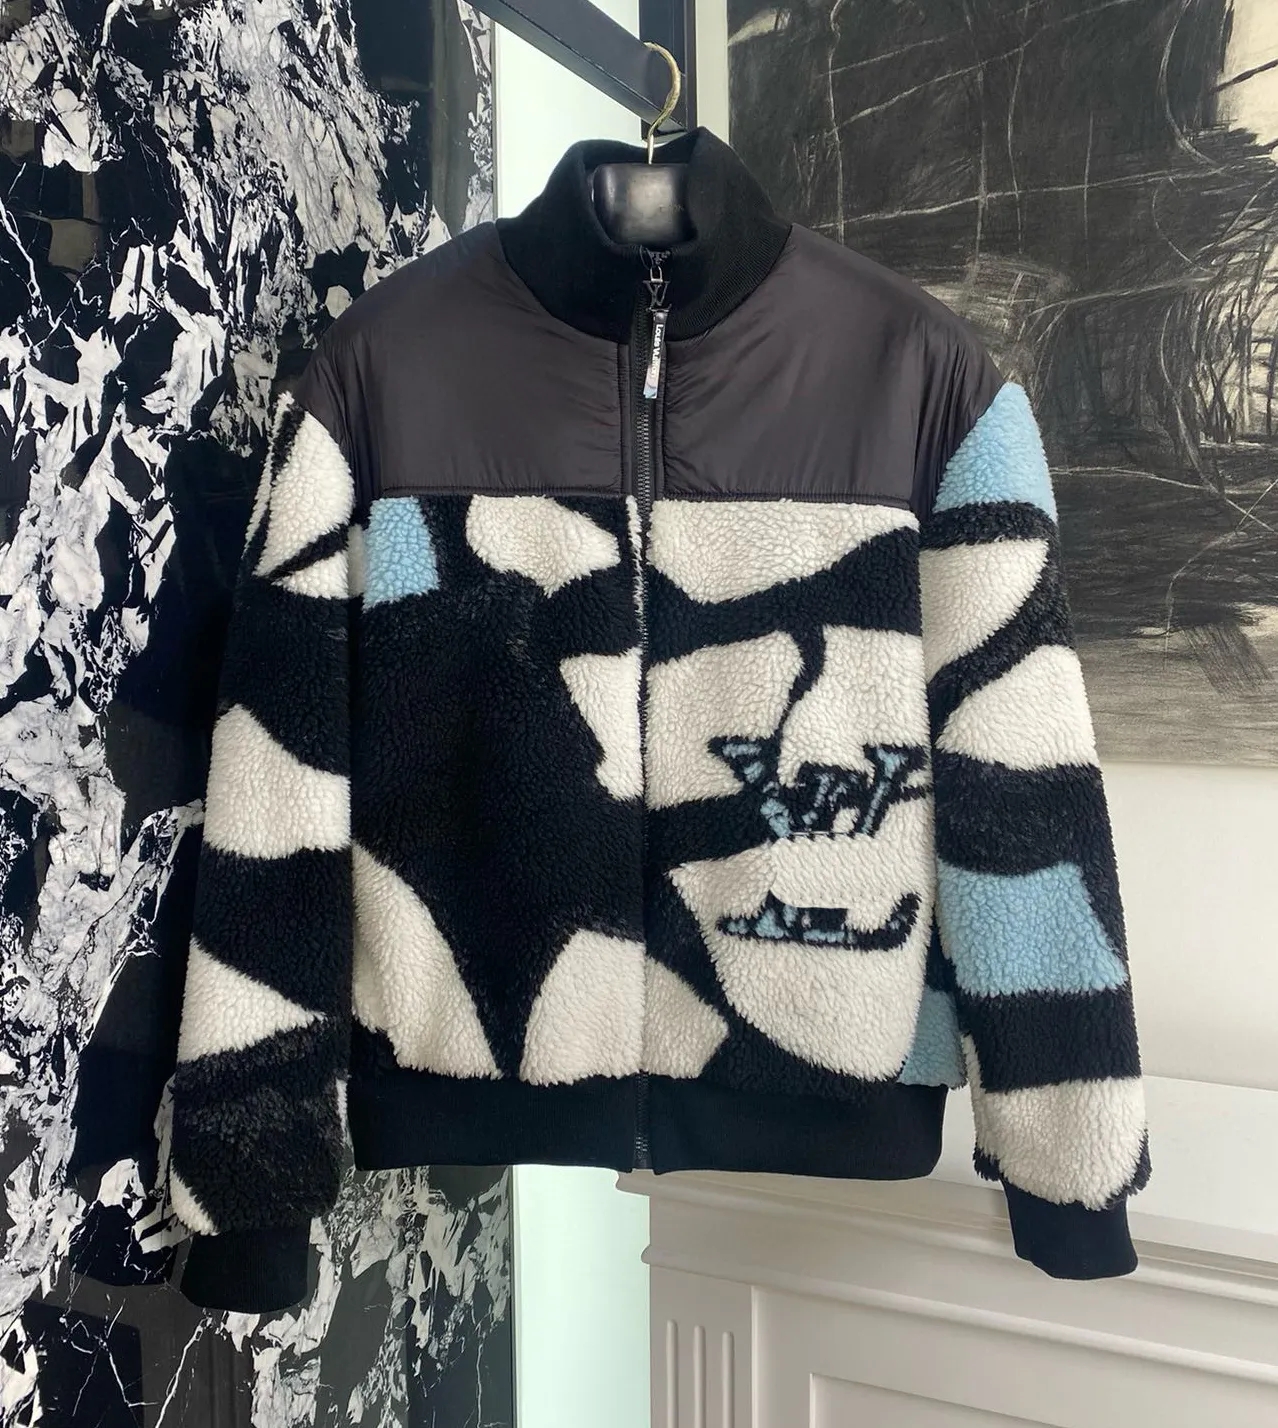 Men's Plus Size Hoodies & Sweatshirts letter knitted sweater in autumn / winter acquard knitting machine e Custom jnlarged detail crew neck cotton 3e22r